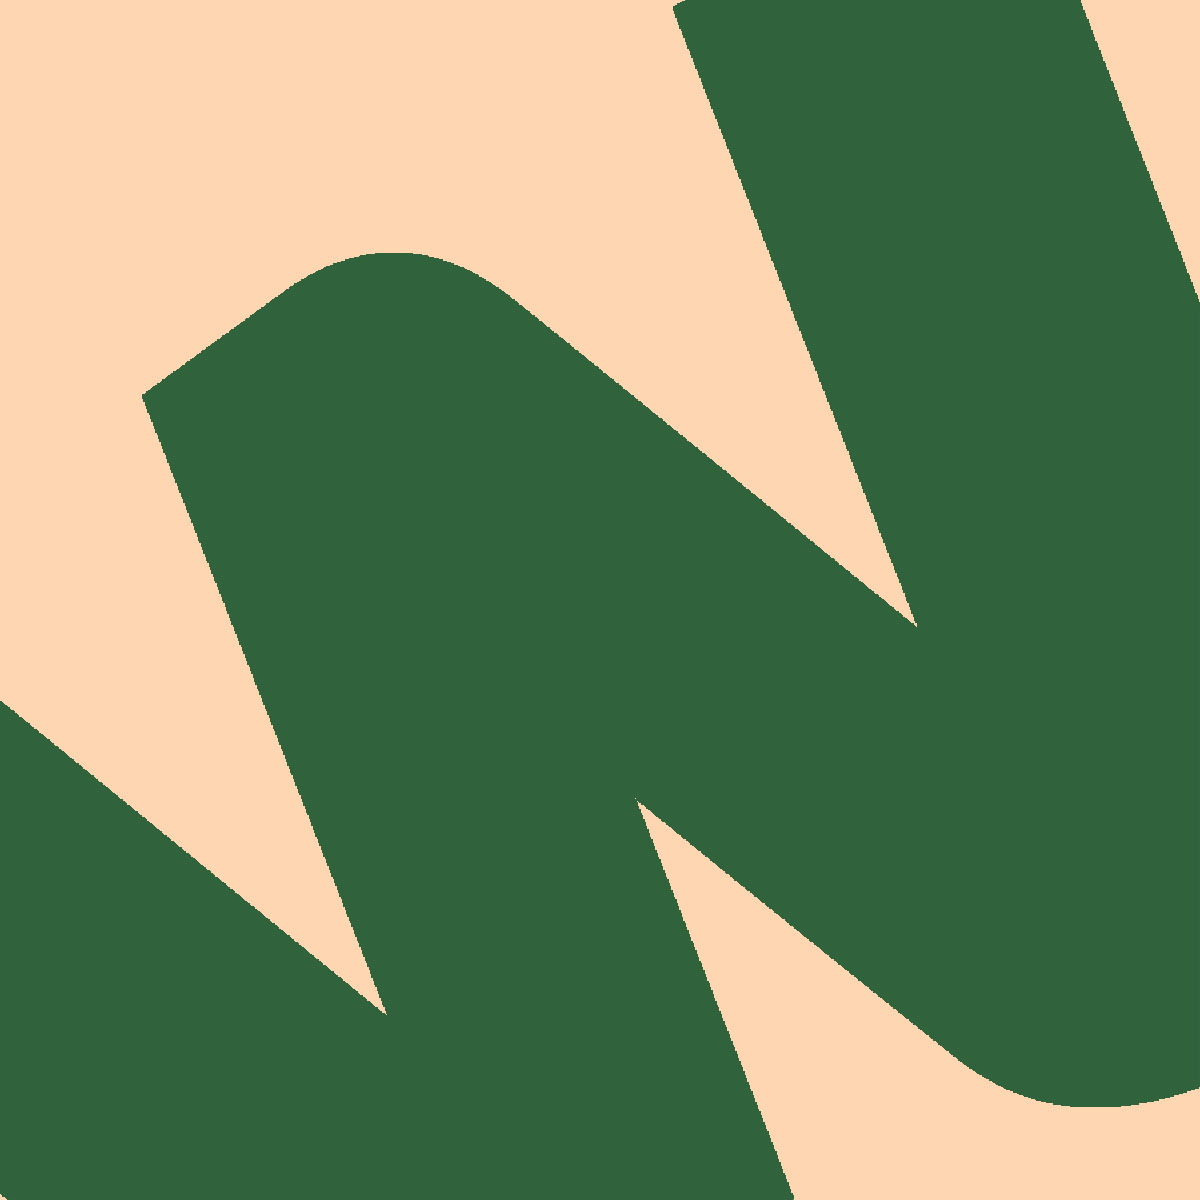 Wellcome's logo